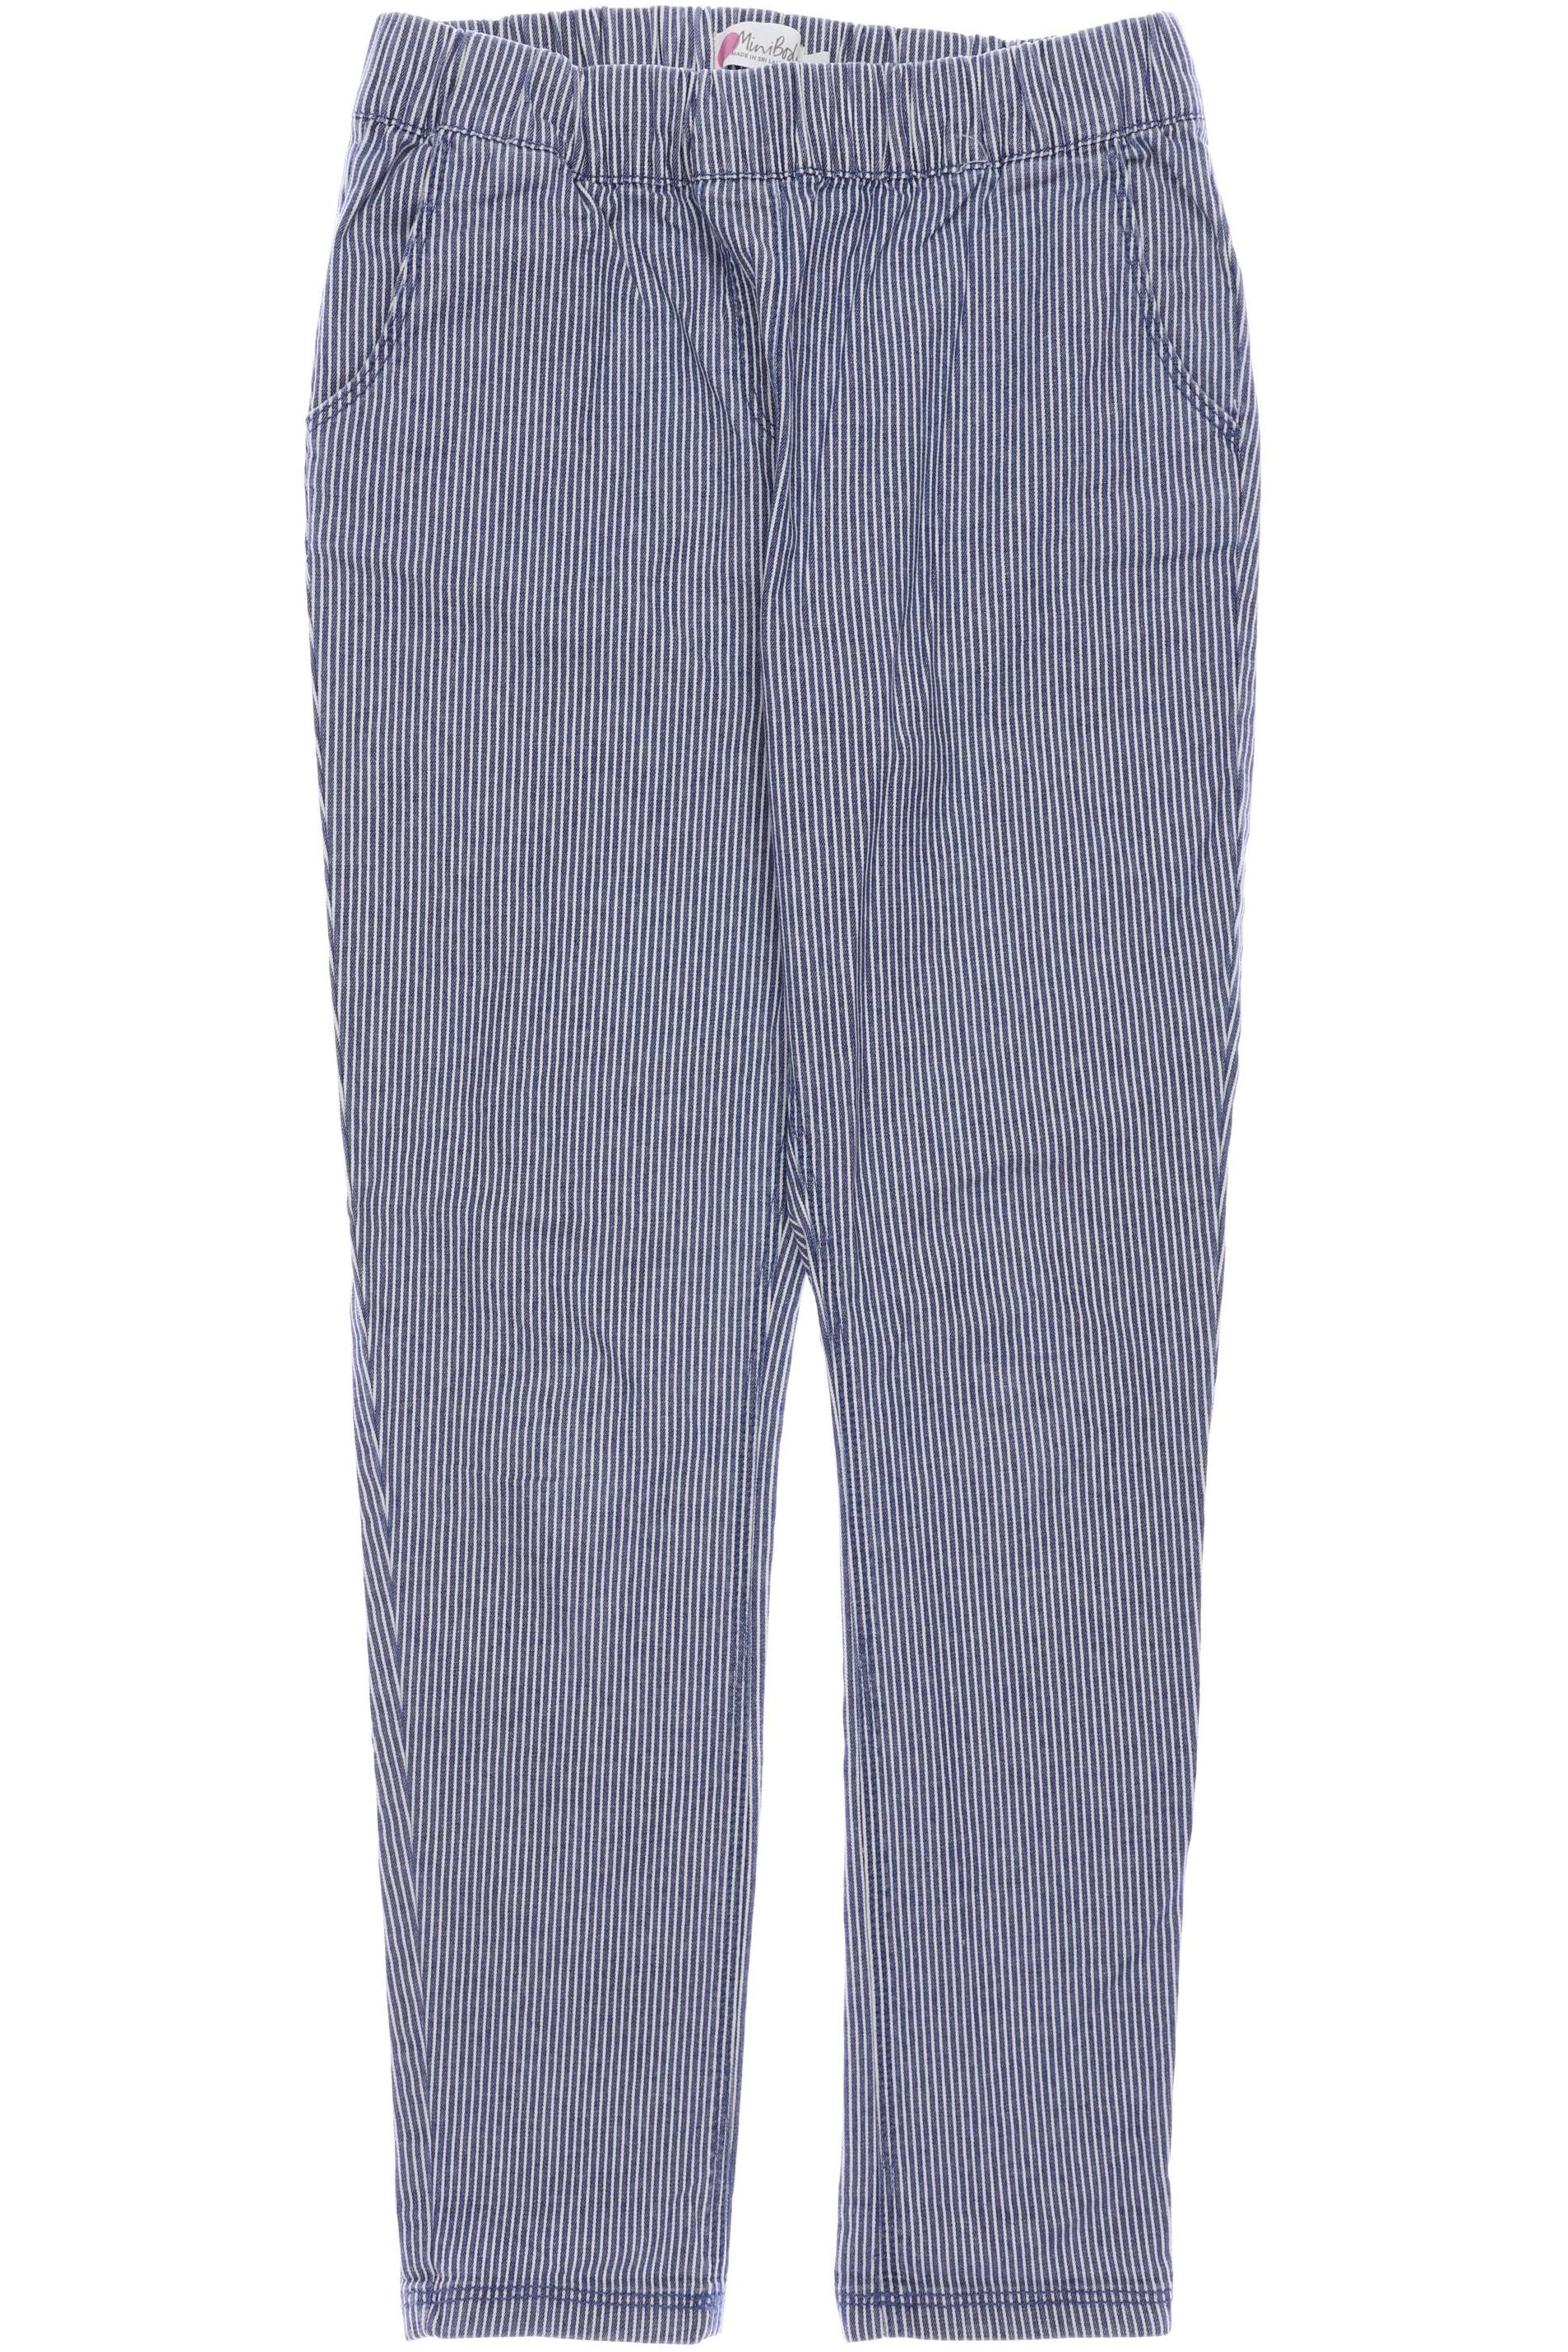 Mini Boden Damen Jeans, blau, Gr. 140 von Mini Boden